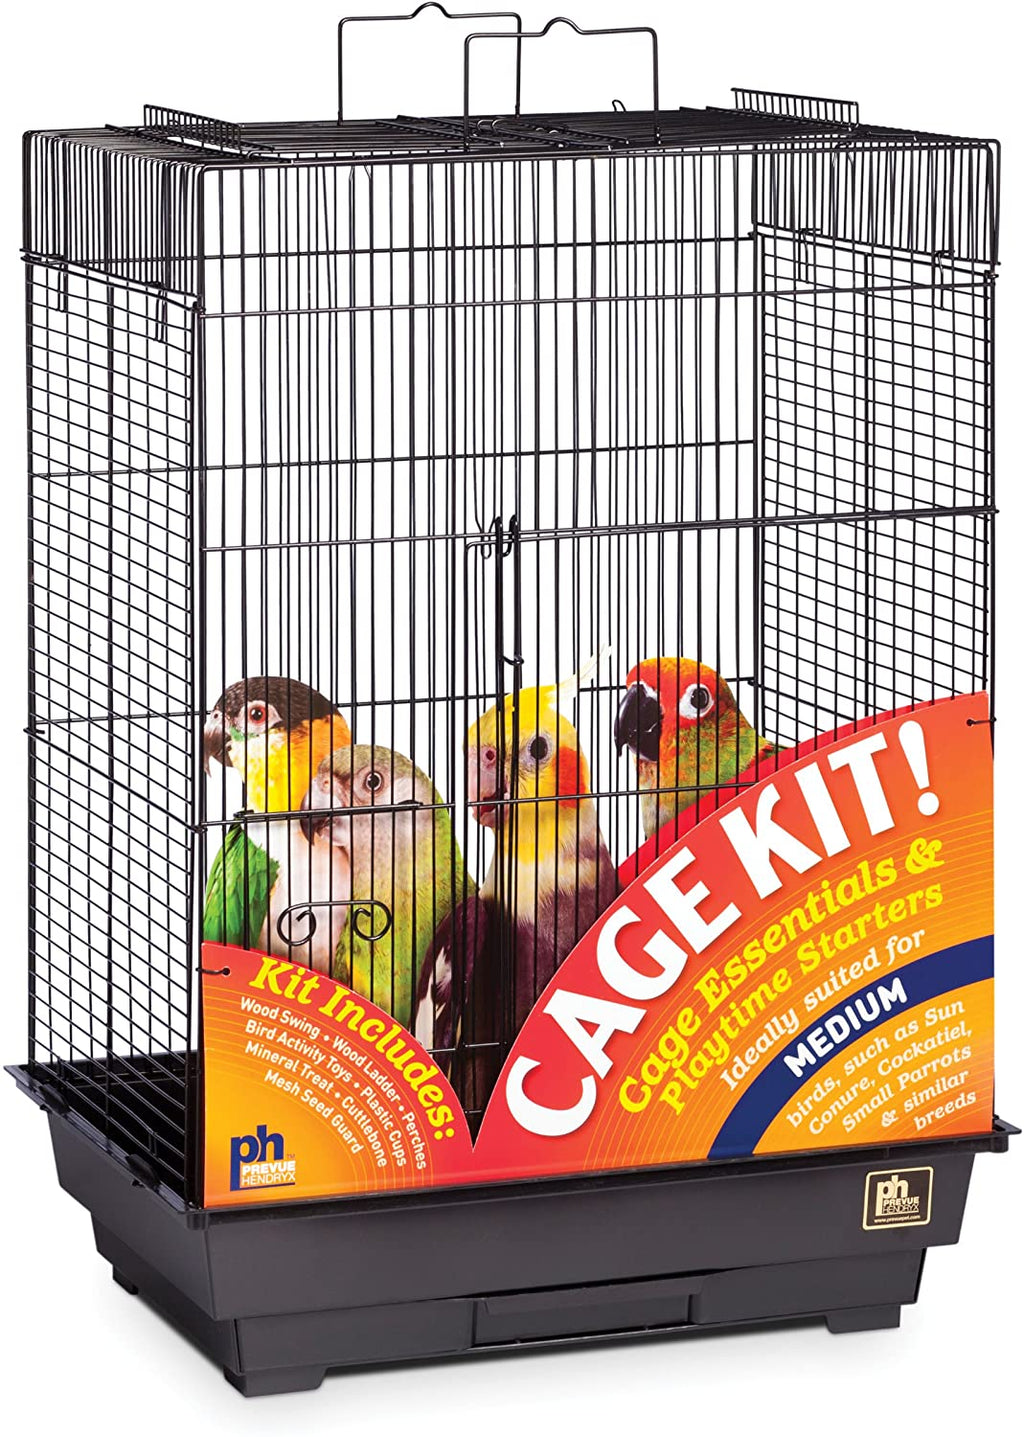 Prevue Hendryx Bird Cage Saver Scrub Pad - Assorted Colors – Pet Life